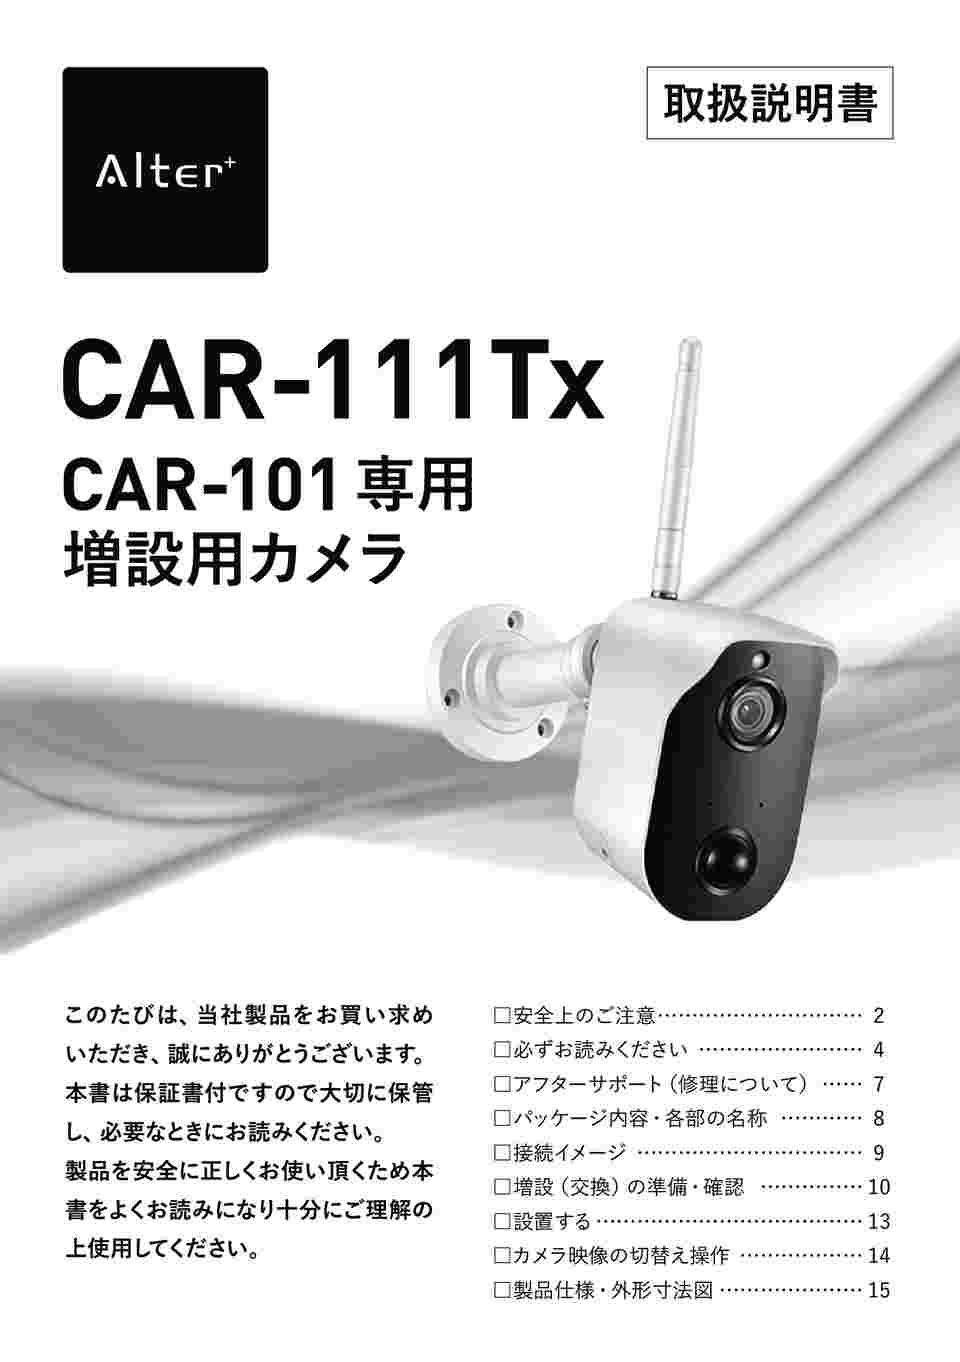 64-9111-95 CAR-101専用増設カメラ CAR-111Tx 【AXEL】 アズワン